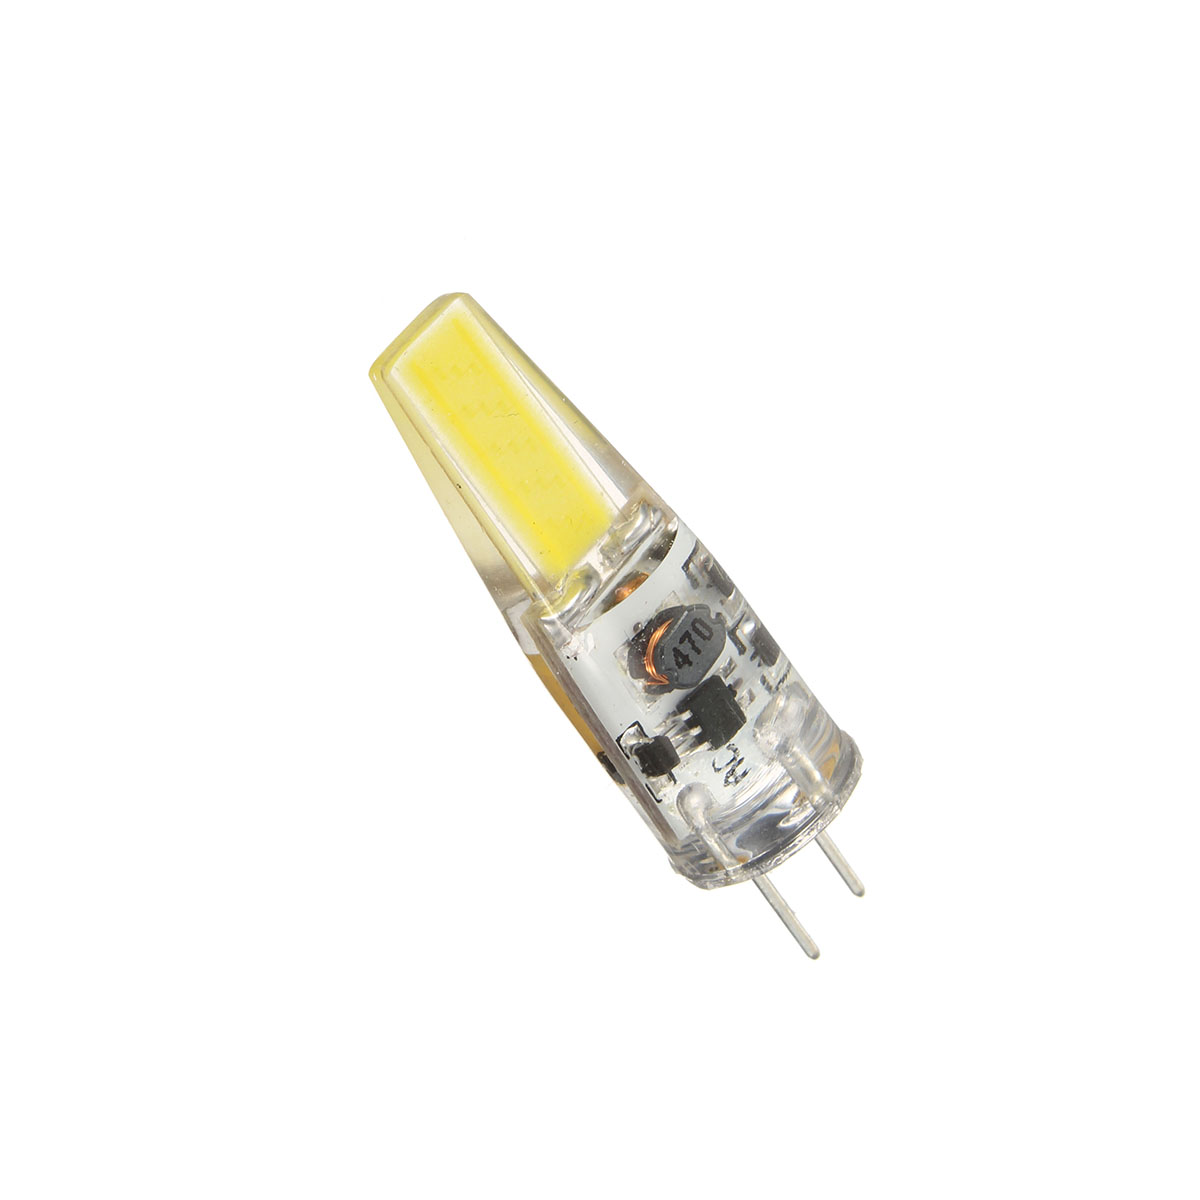 4PCS-Mini-G4-2W-Pure-White-COB-LED-Bulb-for-Chandelier-Light-Replace-Halogen-Lamp-DCAC12V-1454467-3